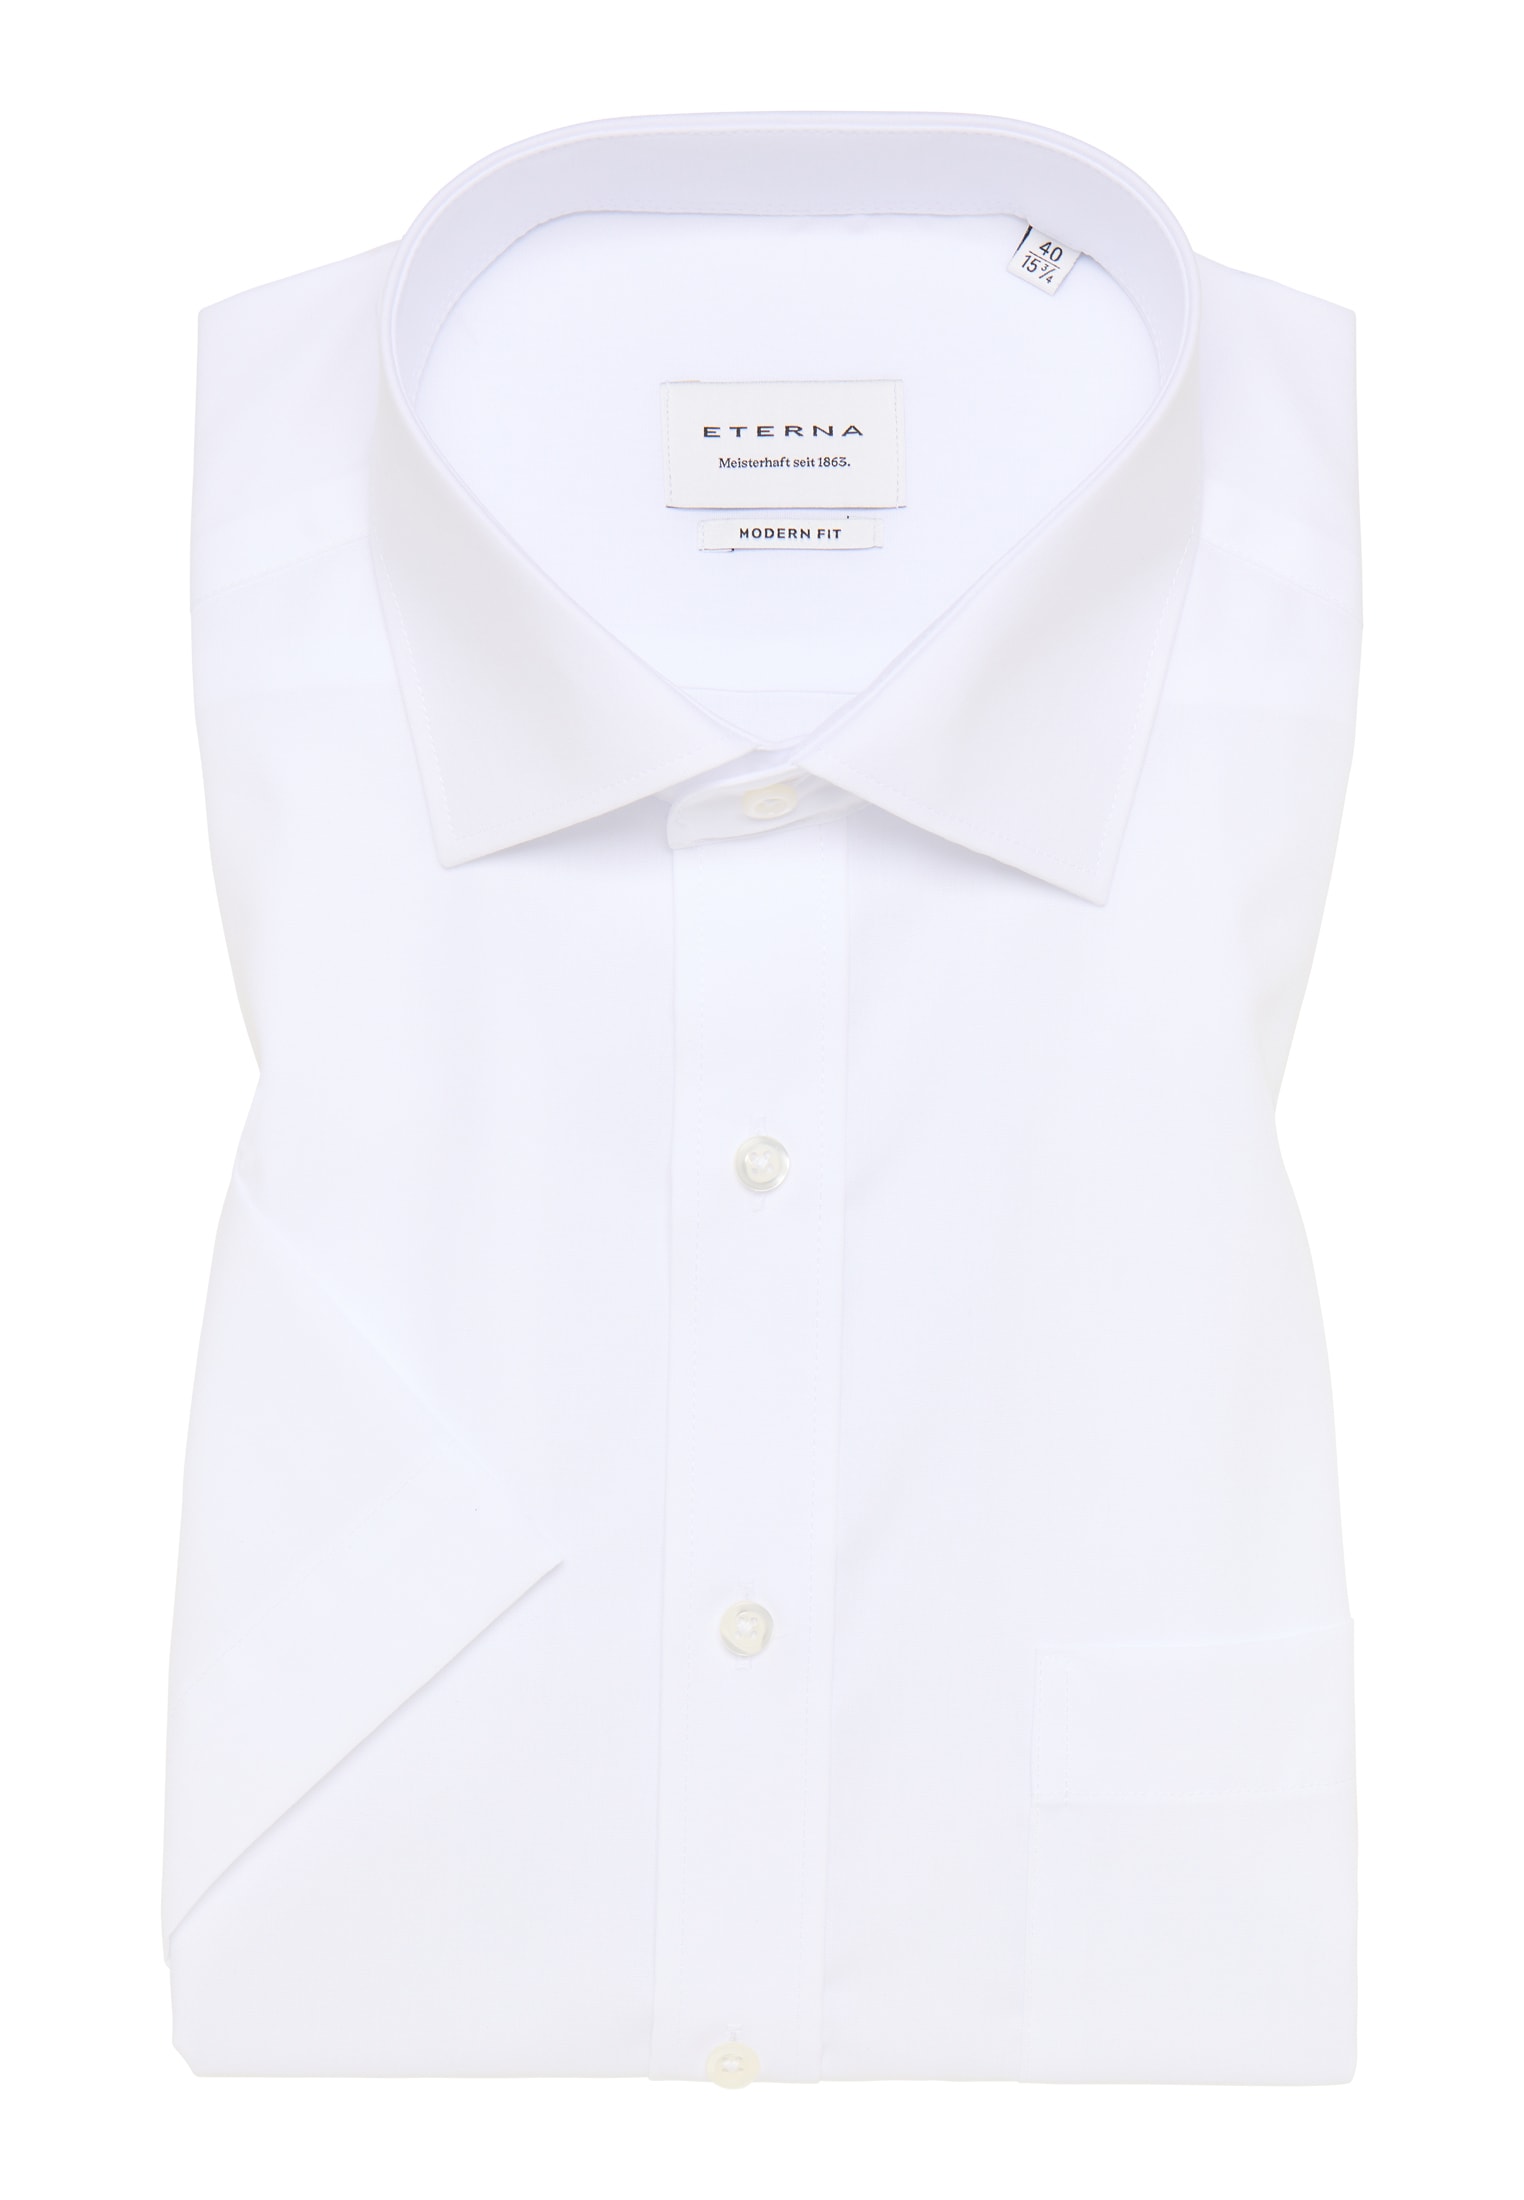 MODERN FIT Original 37 | | Kurzarm unifarben weiß | 1SH00092-00-01-37-1/2 weiß | Shirt in